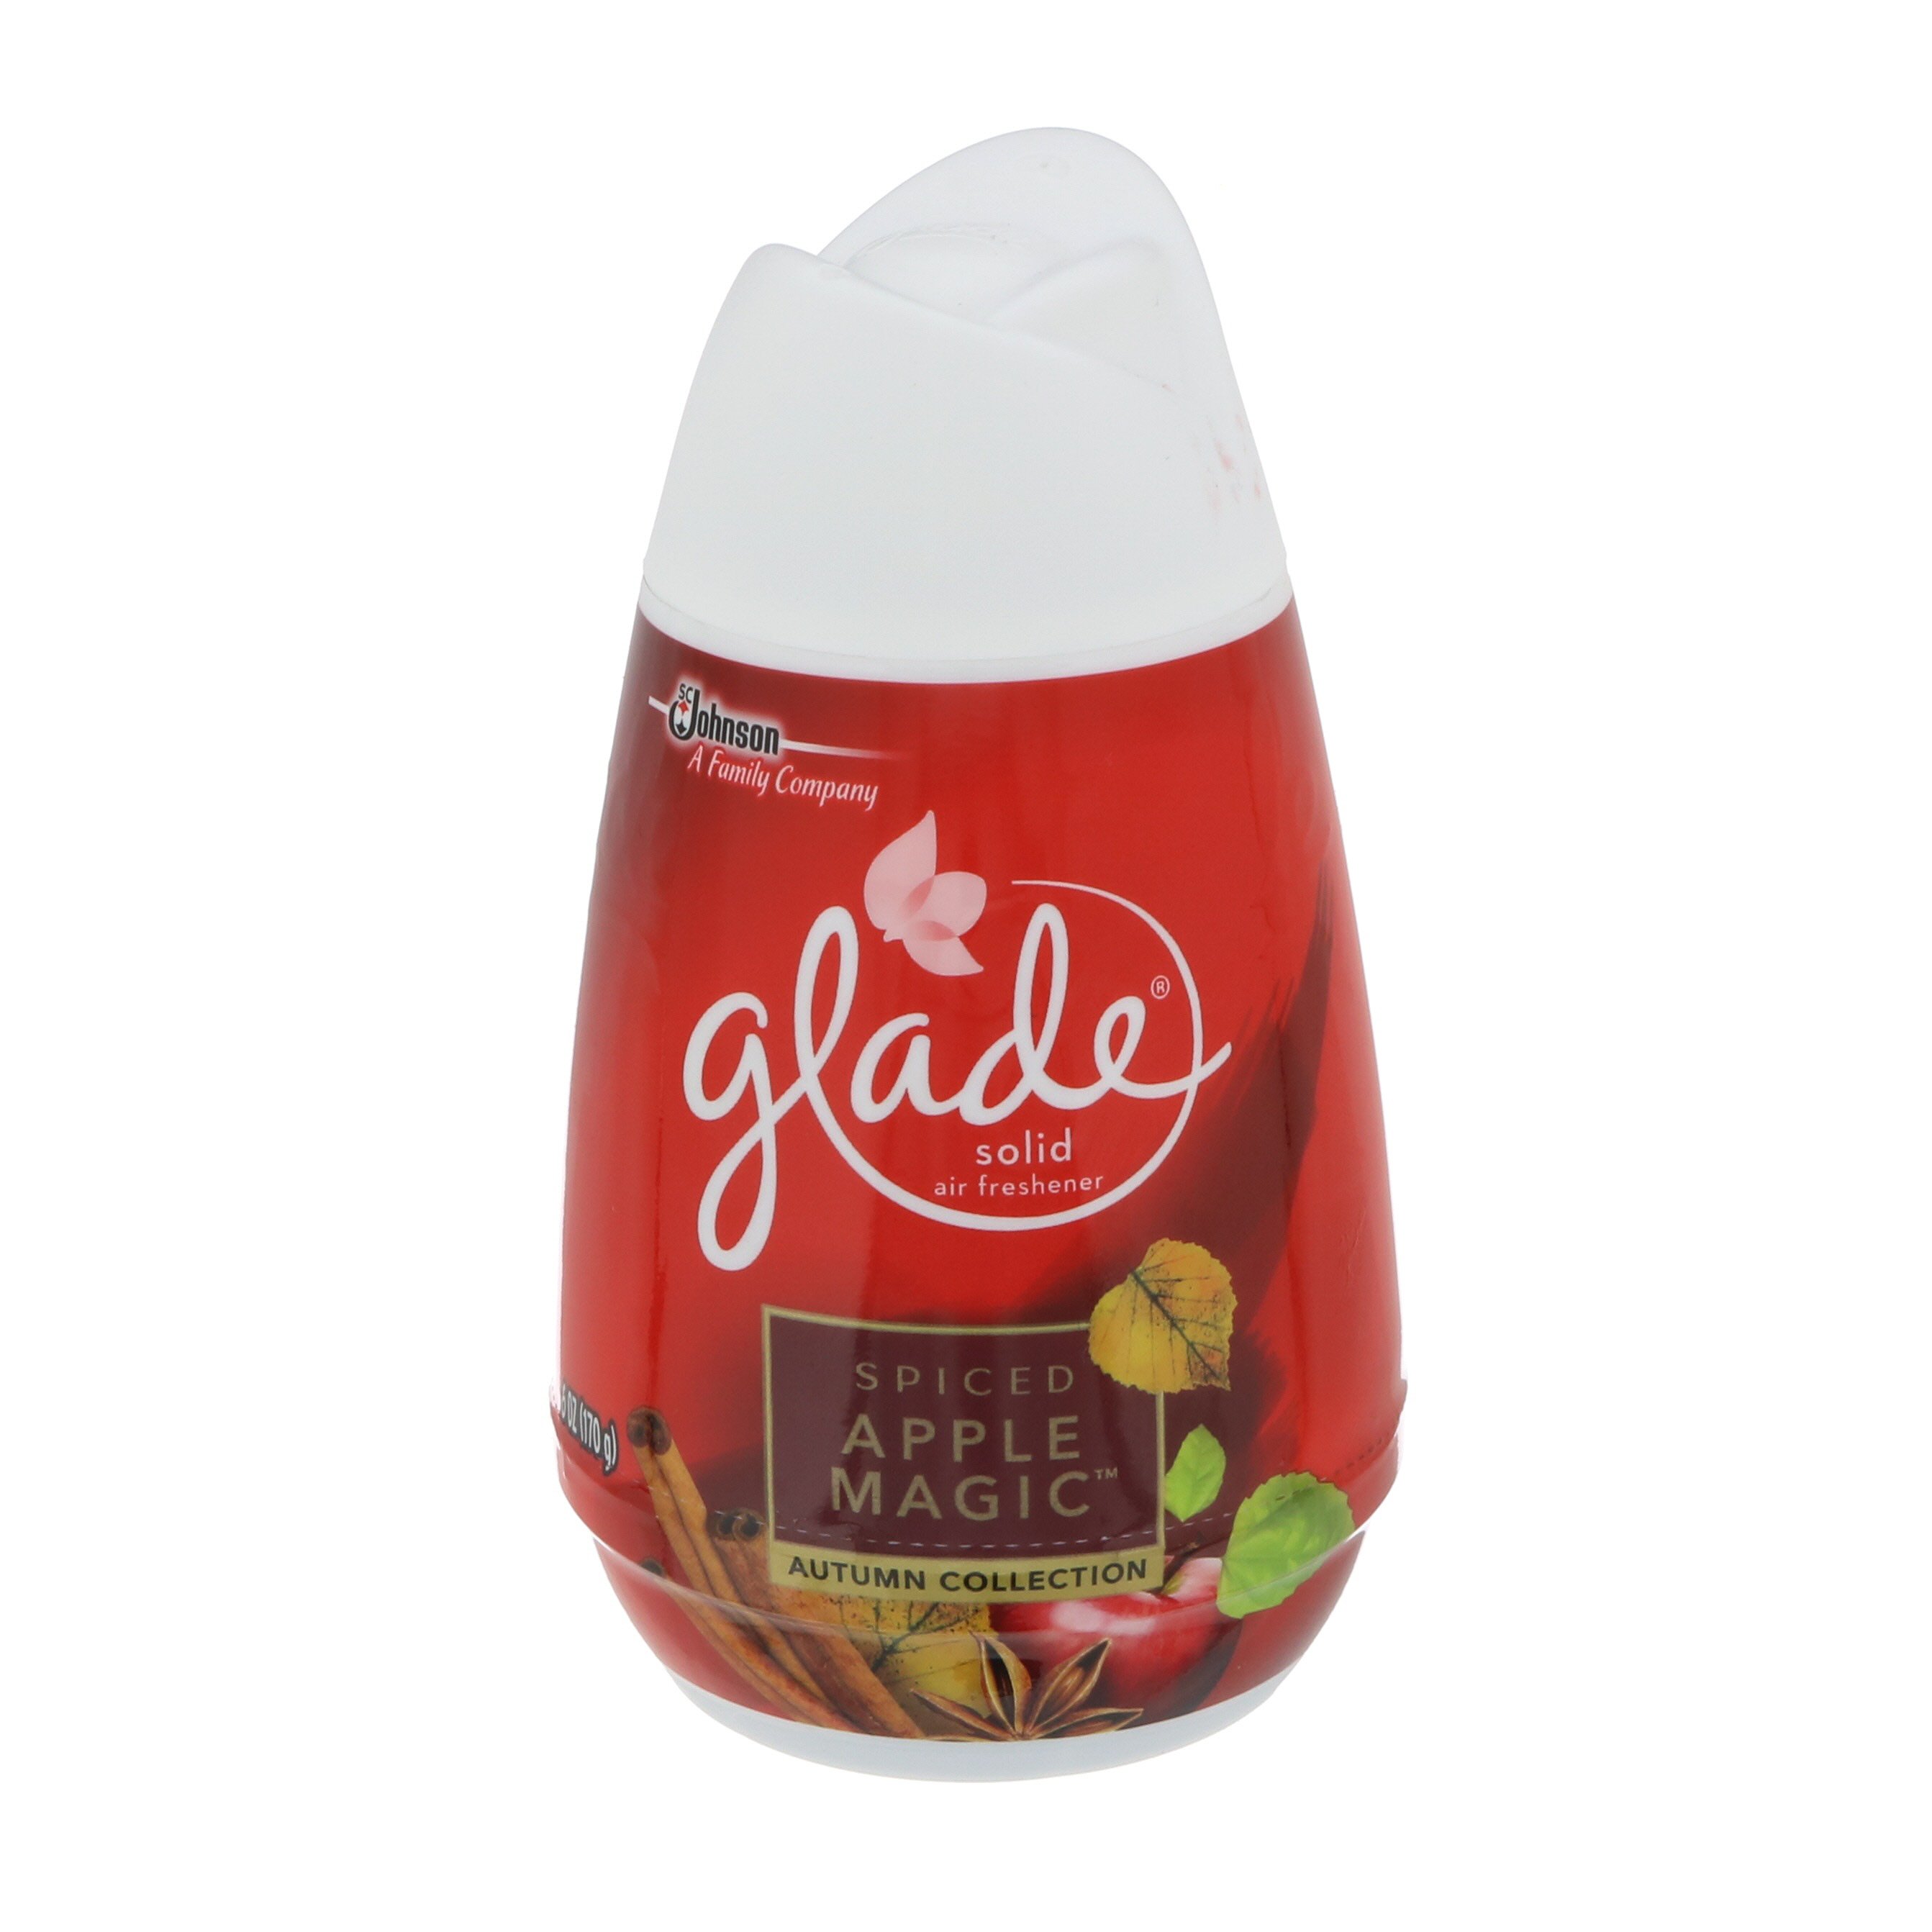 Glade Spiced Apple Magic Solid Air Freshener - Shop Air Fresheners